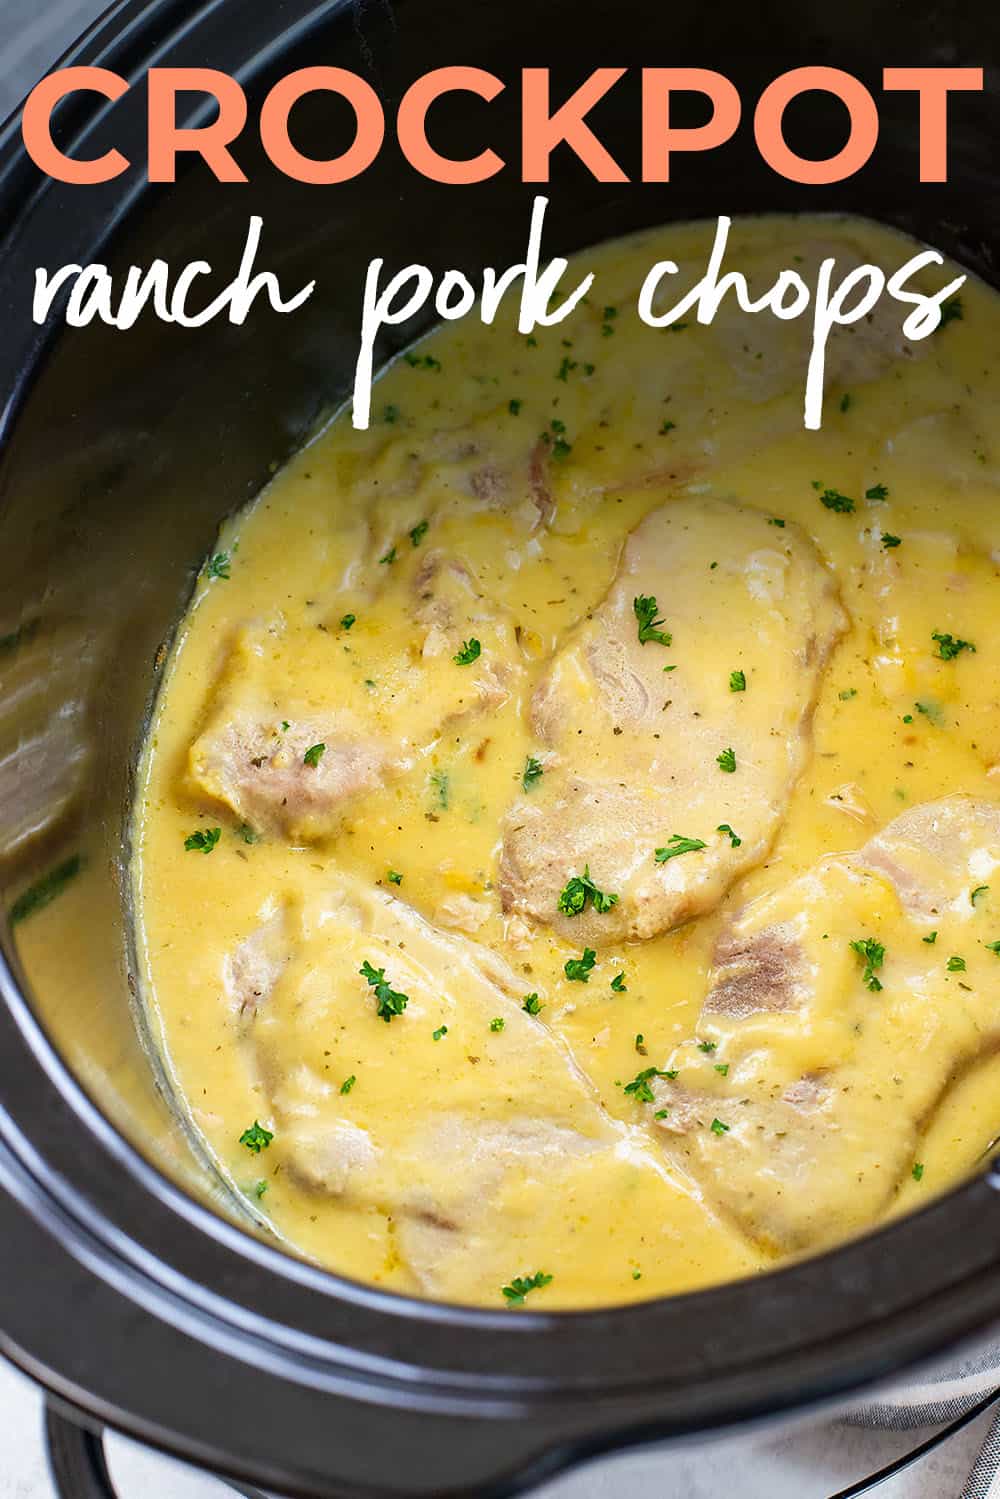 Crockpot Ranch Pork Chops | Buns In My Oven